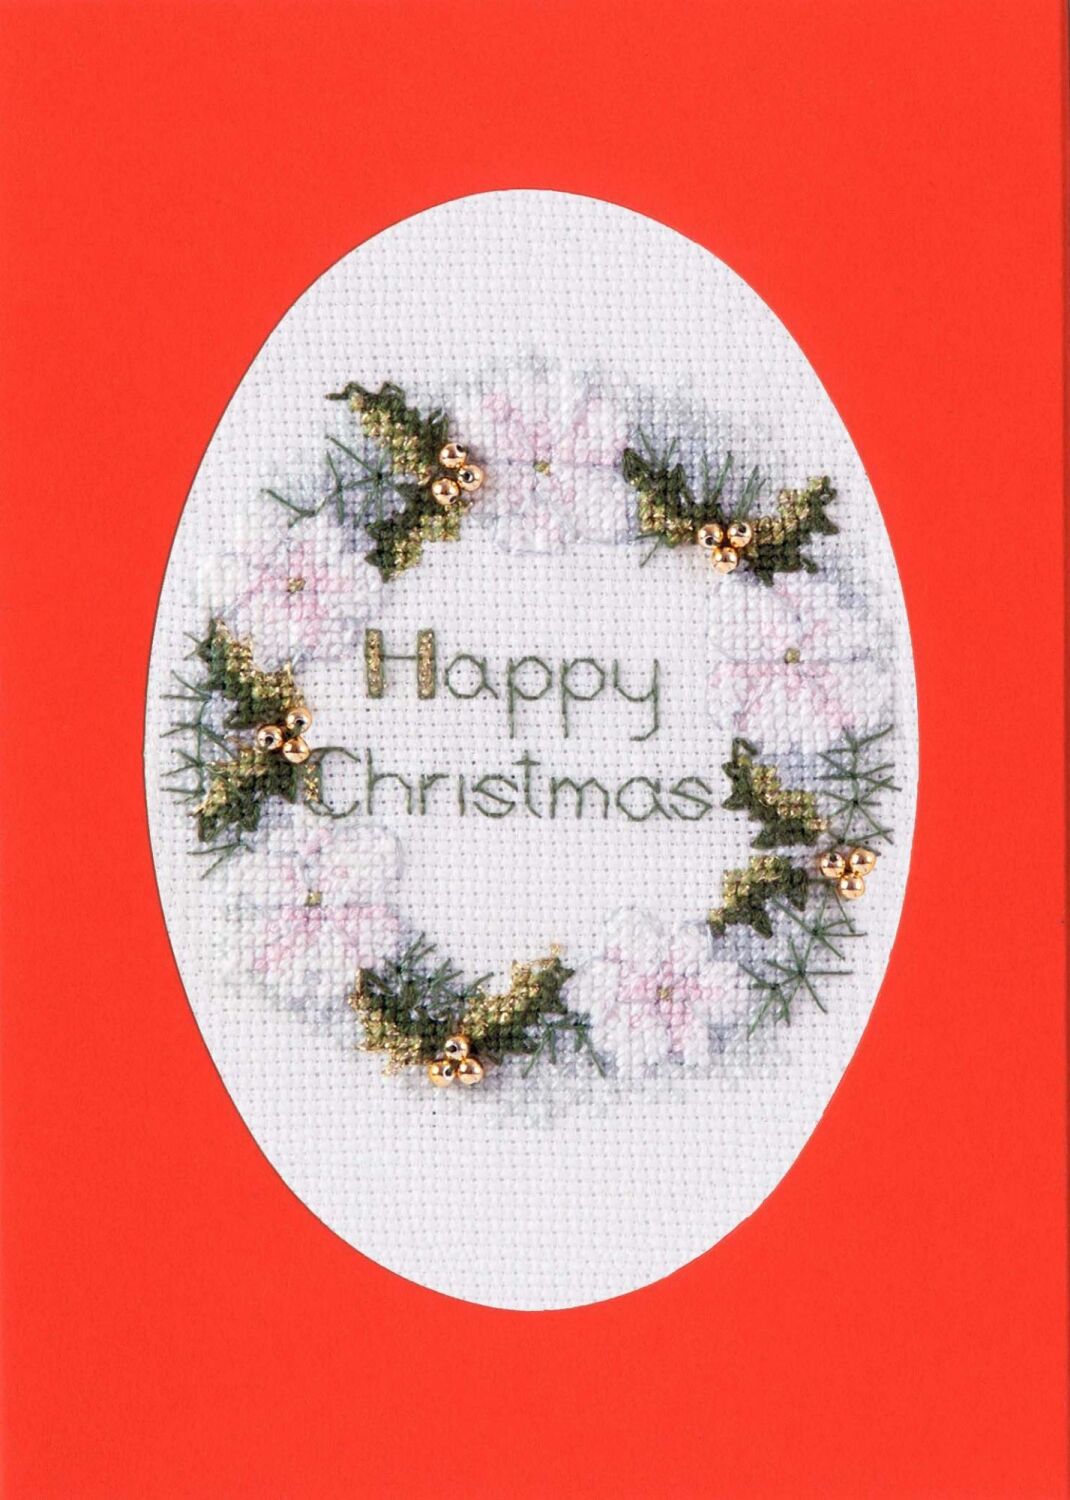 Golden Wreath - Christmas Card